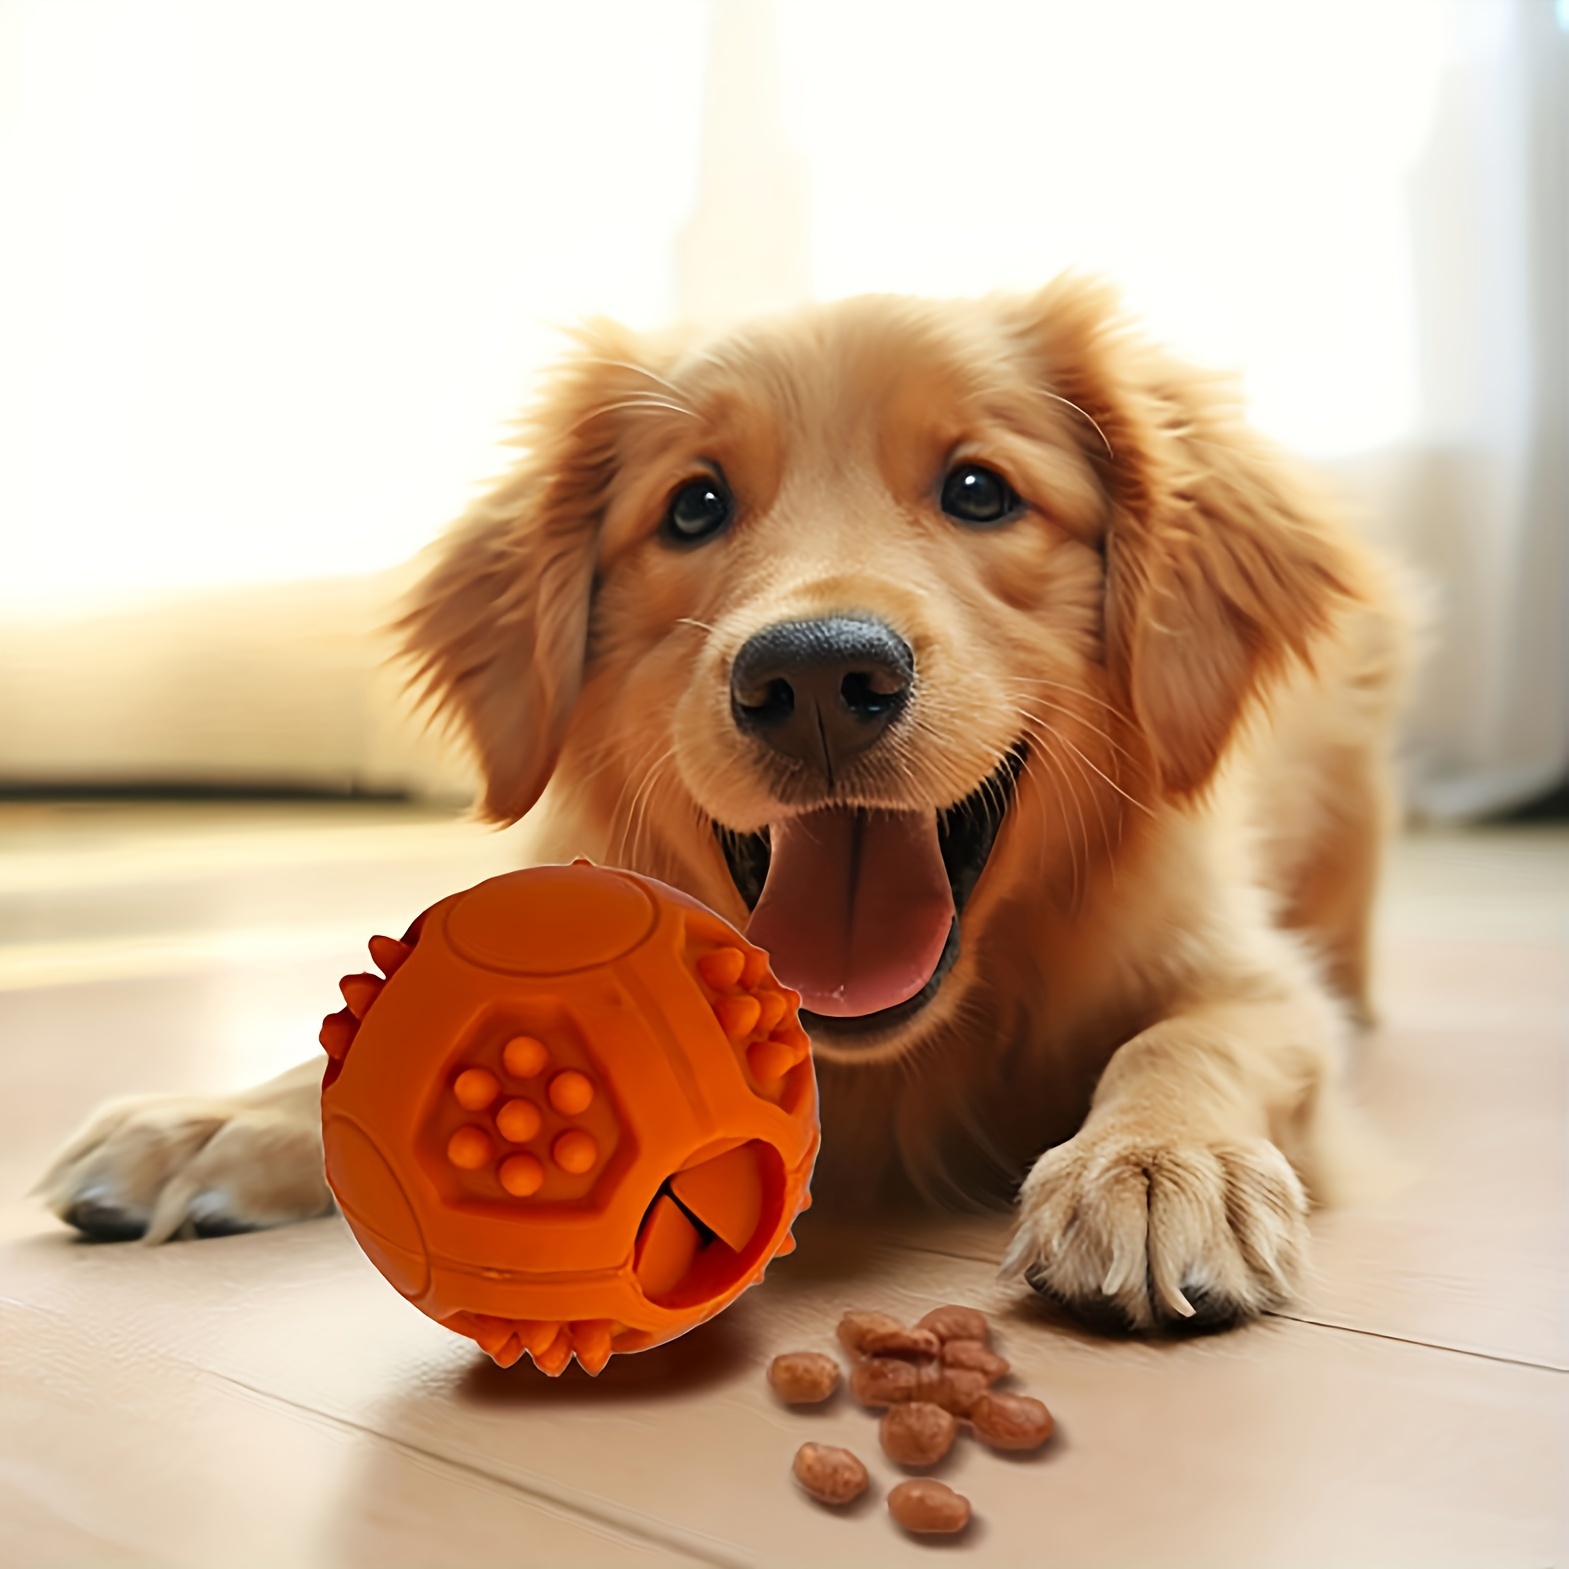 Dogs Snuffle Toy Ramen Treats Toy Pet Food Ball Slowing-Feeding